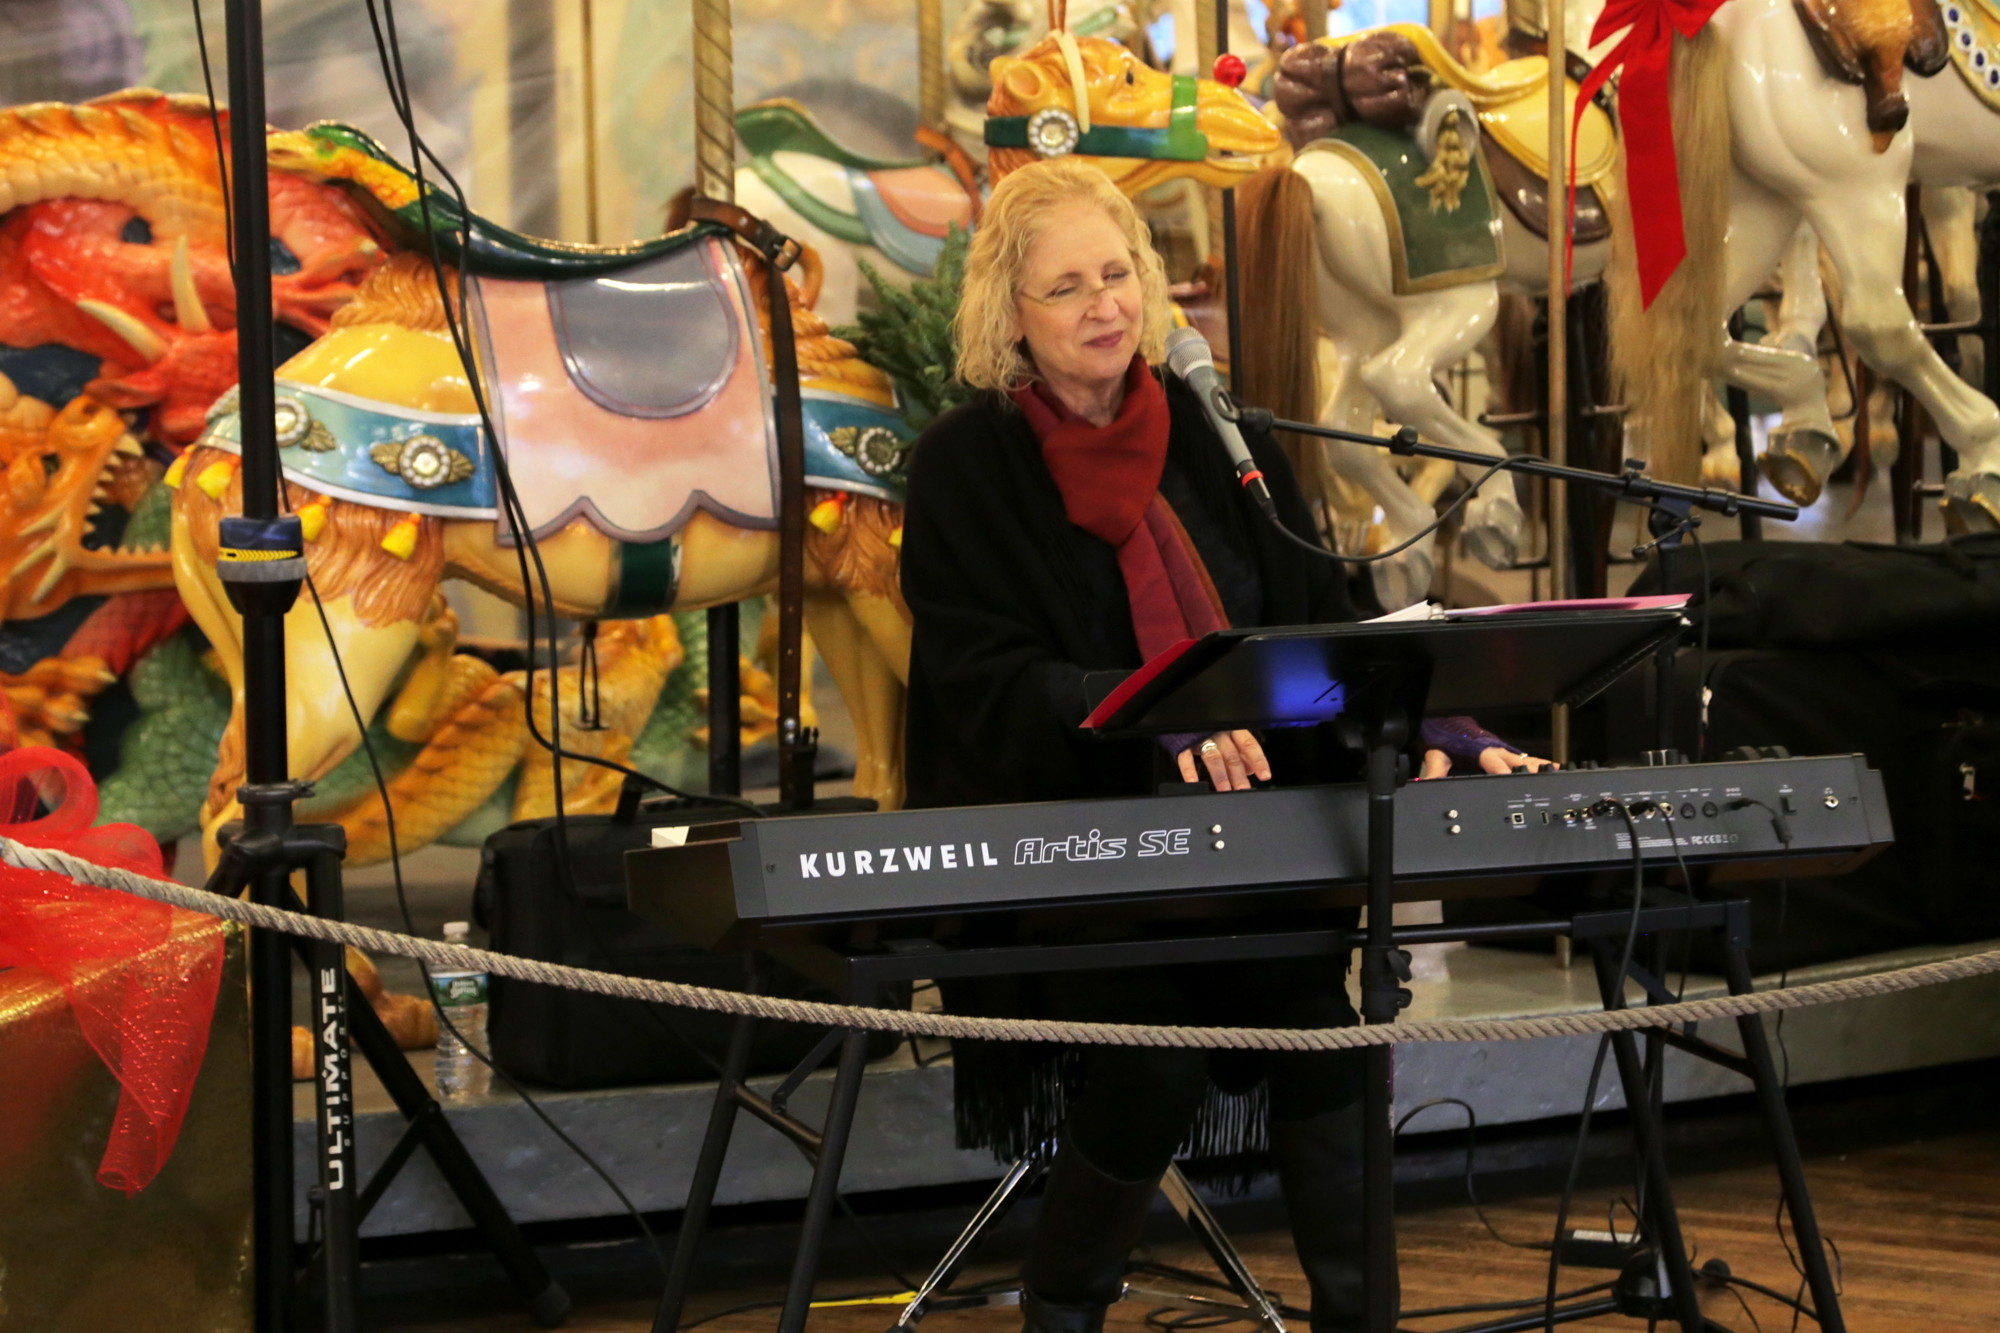 Debra Mann plays Christmas Carols on the piano for those waiting